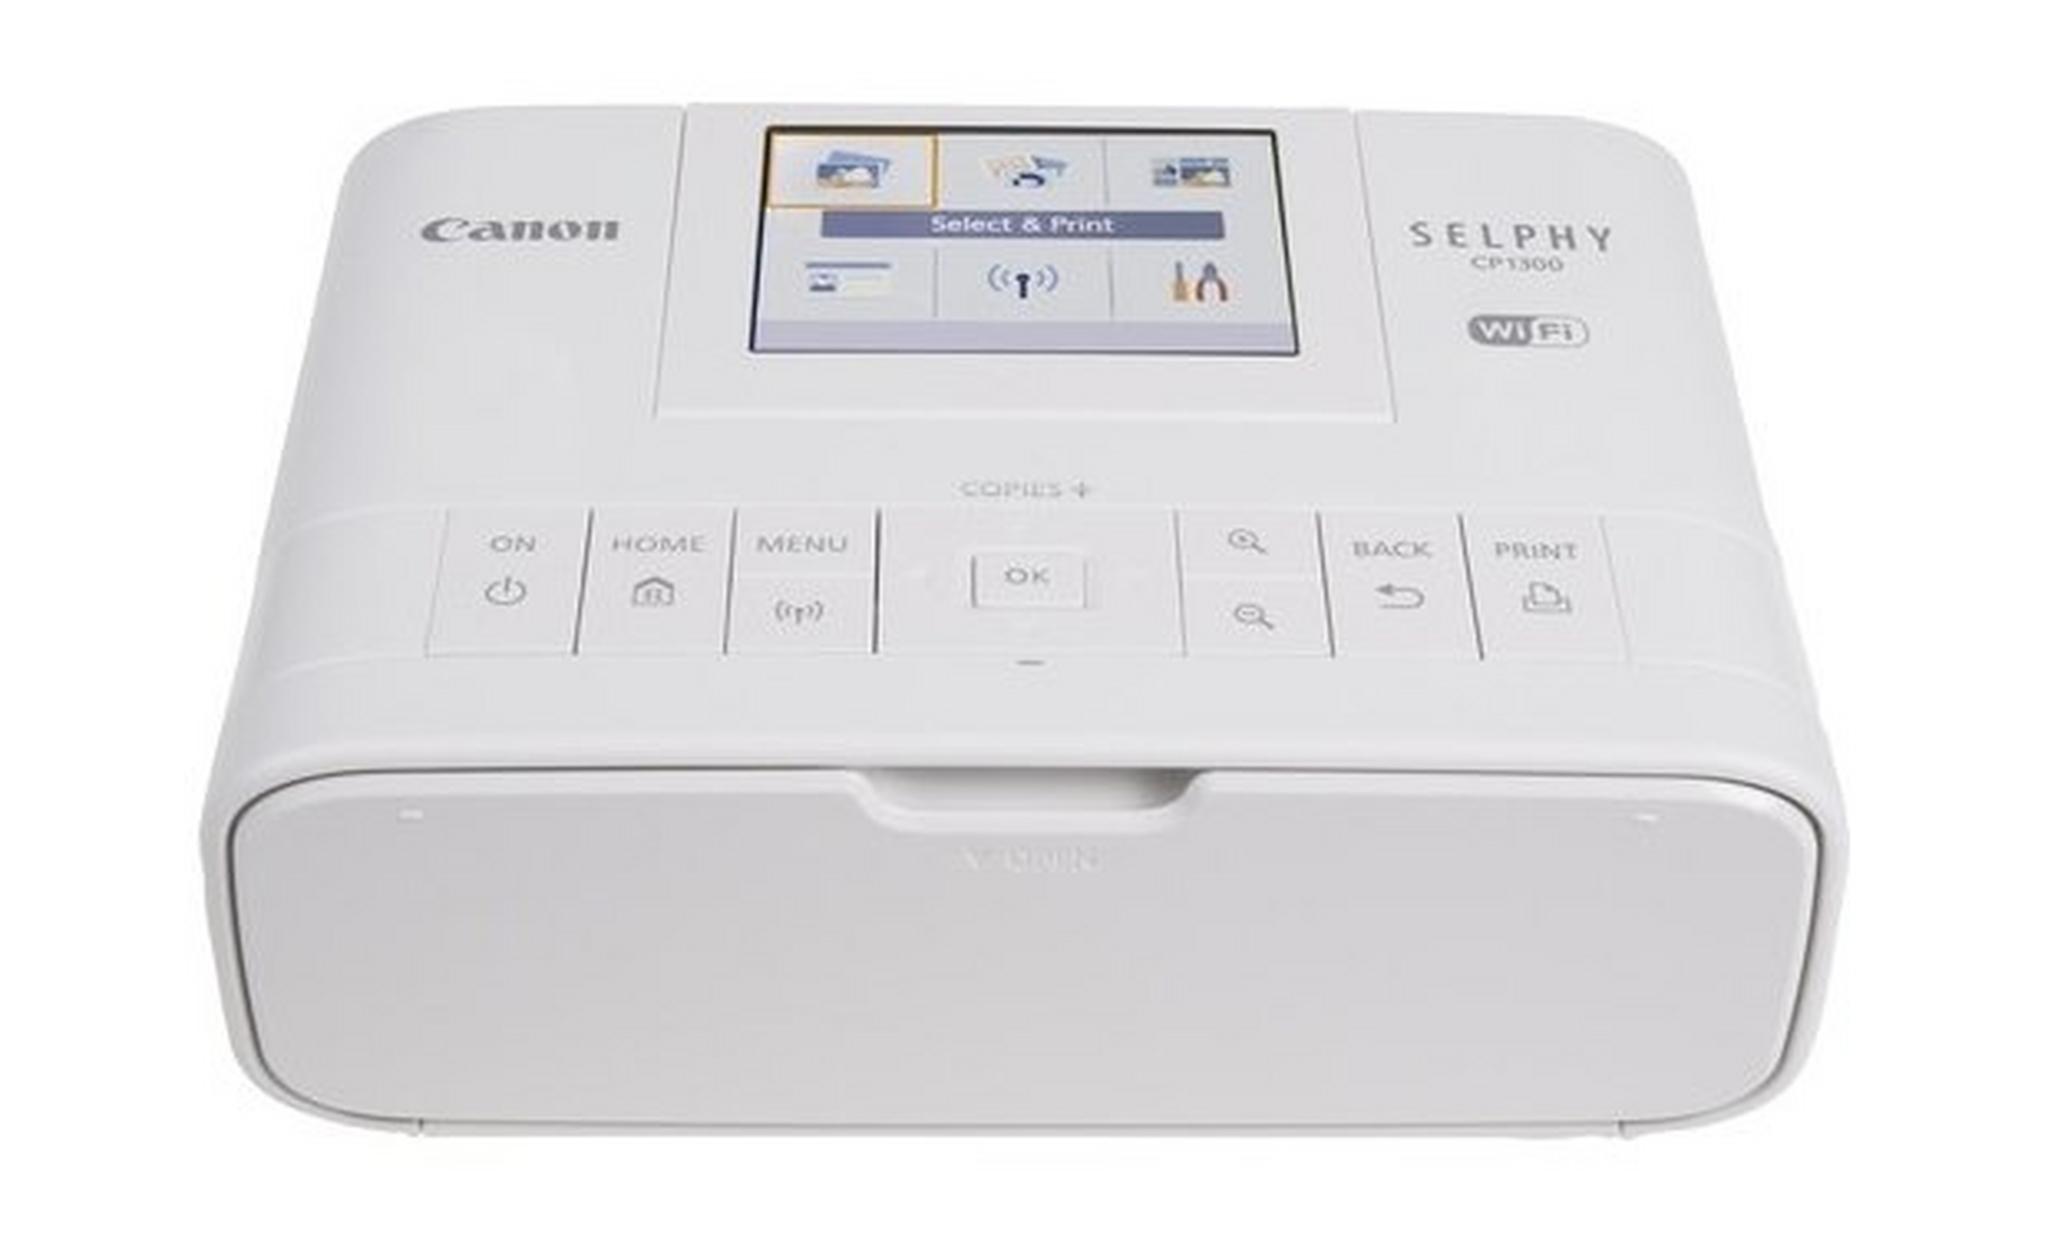 Canon SELPHY CP1300 Compact Photo Printer - White